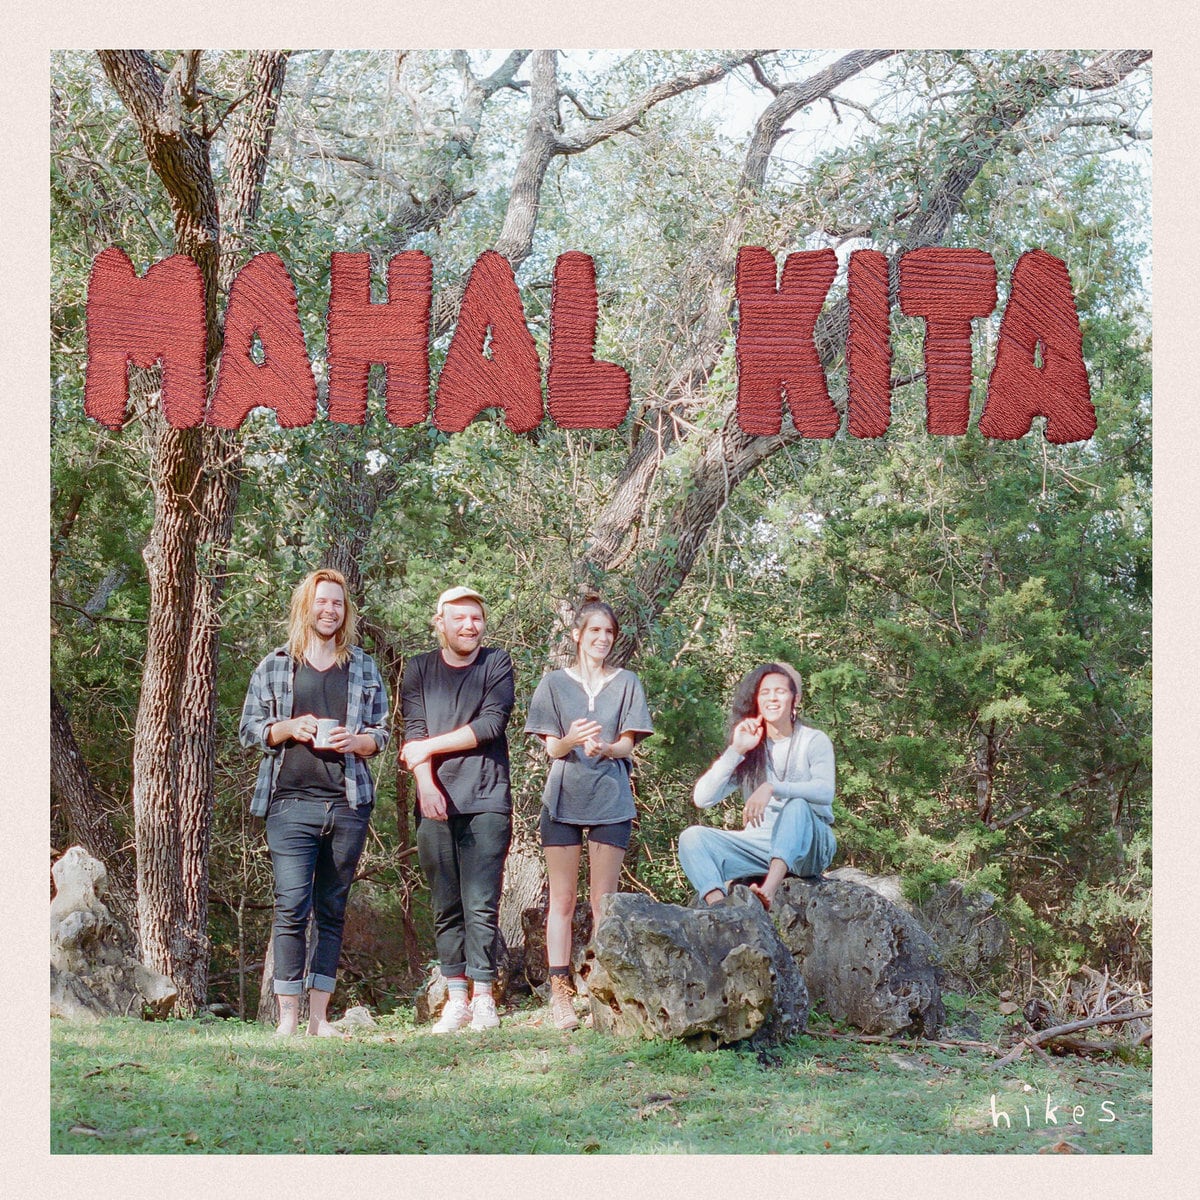 Hikes / Mahal Kita（250 Ltd LP）